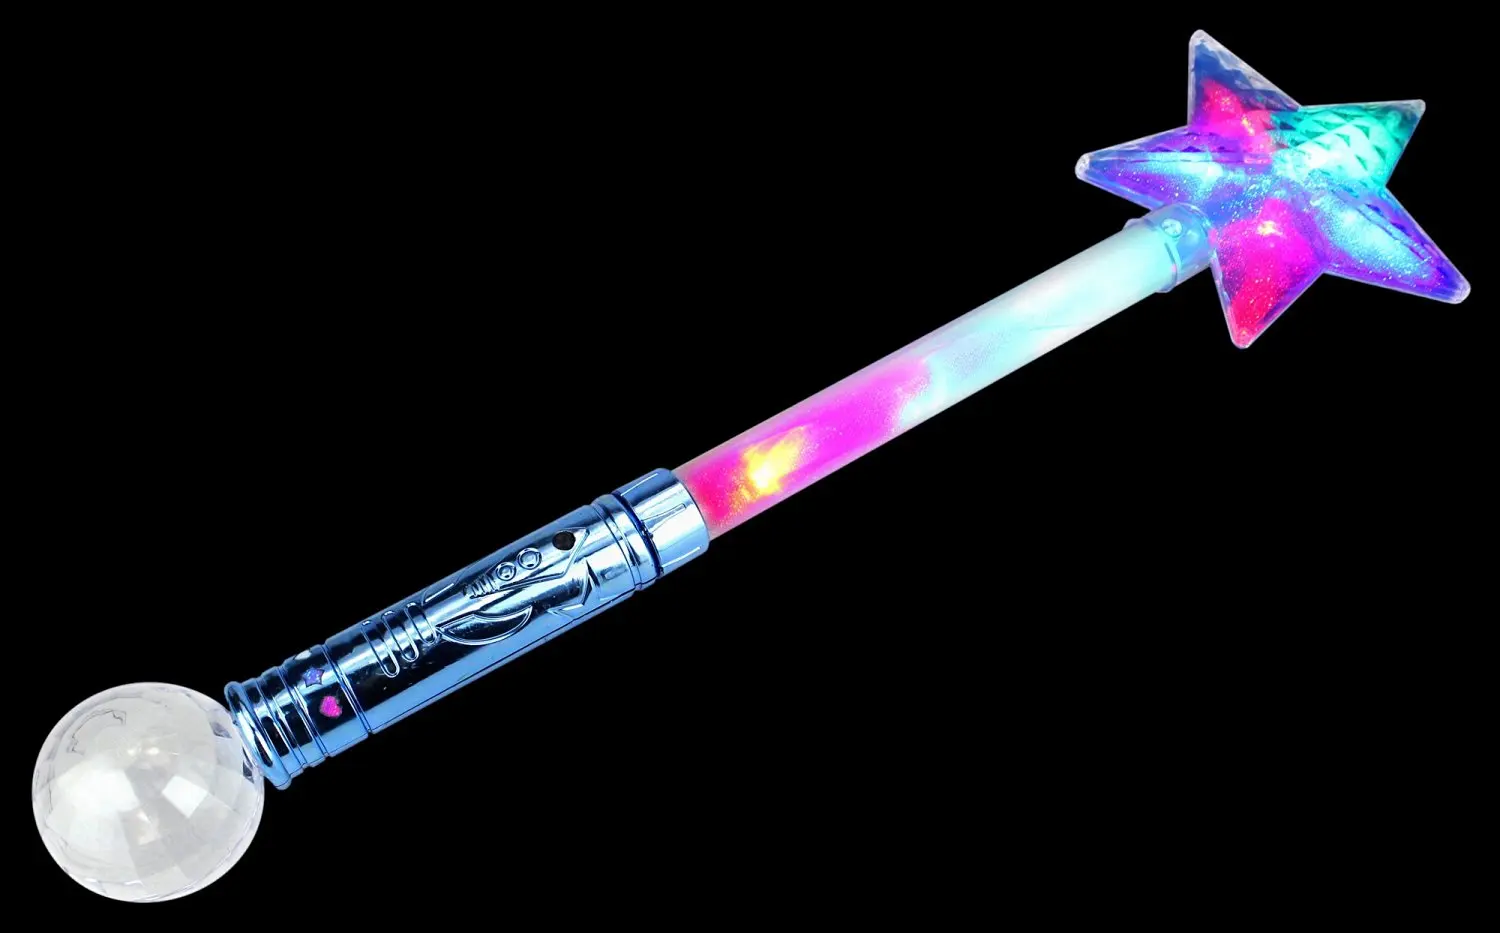 New magic wand speed. Игрушка Волшебная палочка "Magic Wand" y2072102. Волшебный палочка Magic Wand. Волшебная палочка, розовая. Настоящая Волшебная палочка.